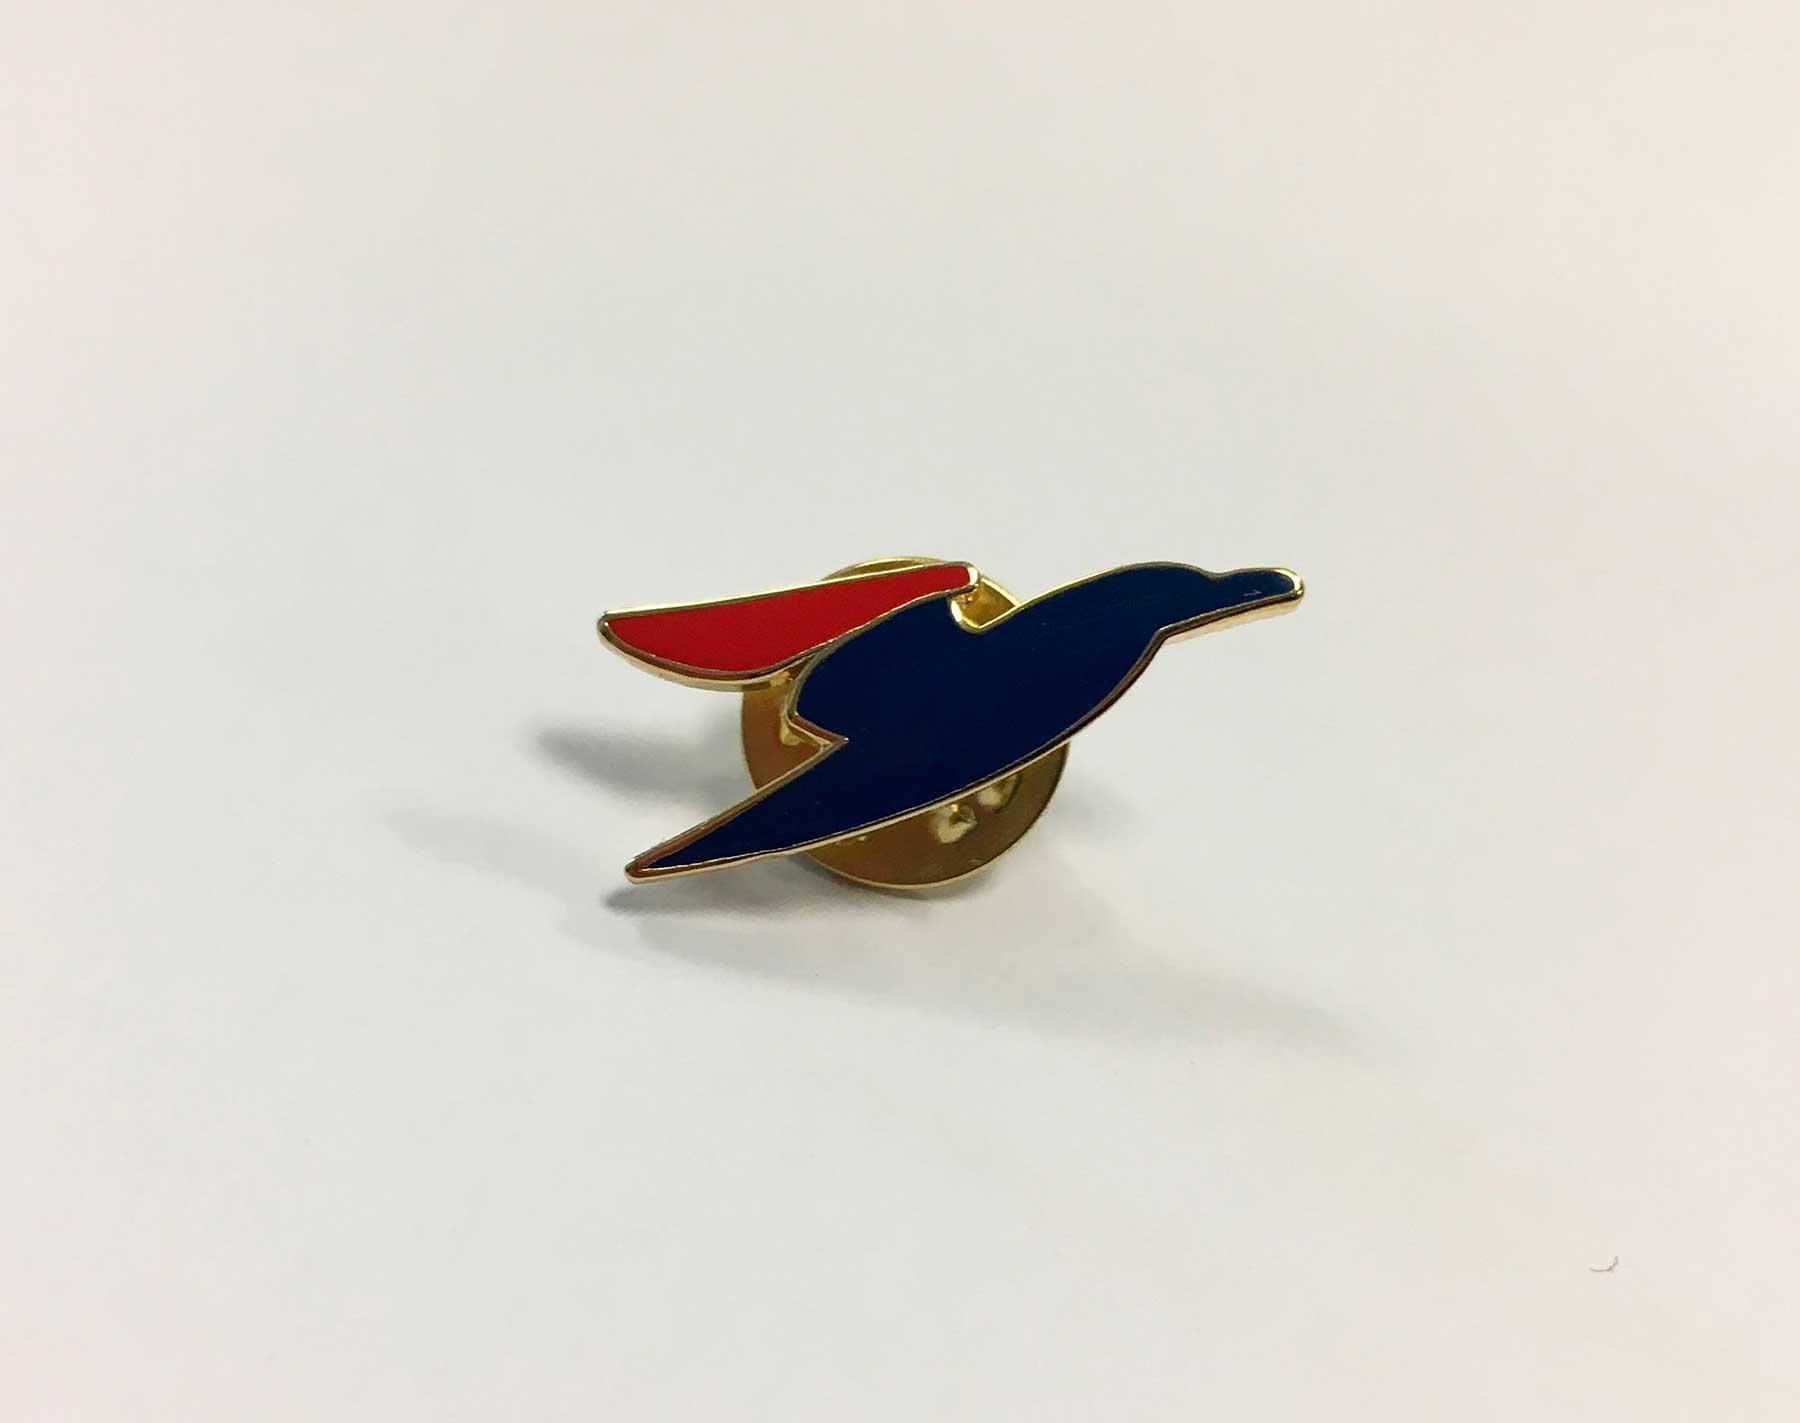 Atlantic Airways pin featuring the company logo - a bird